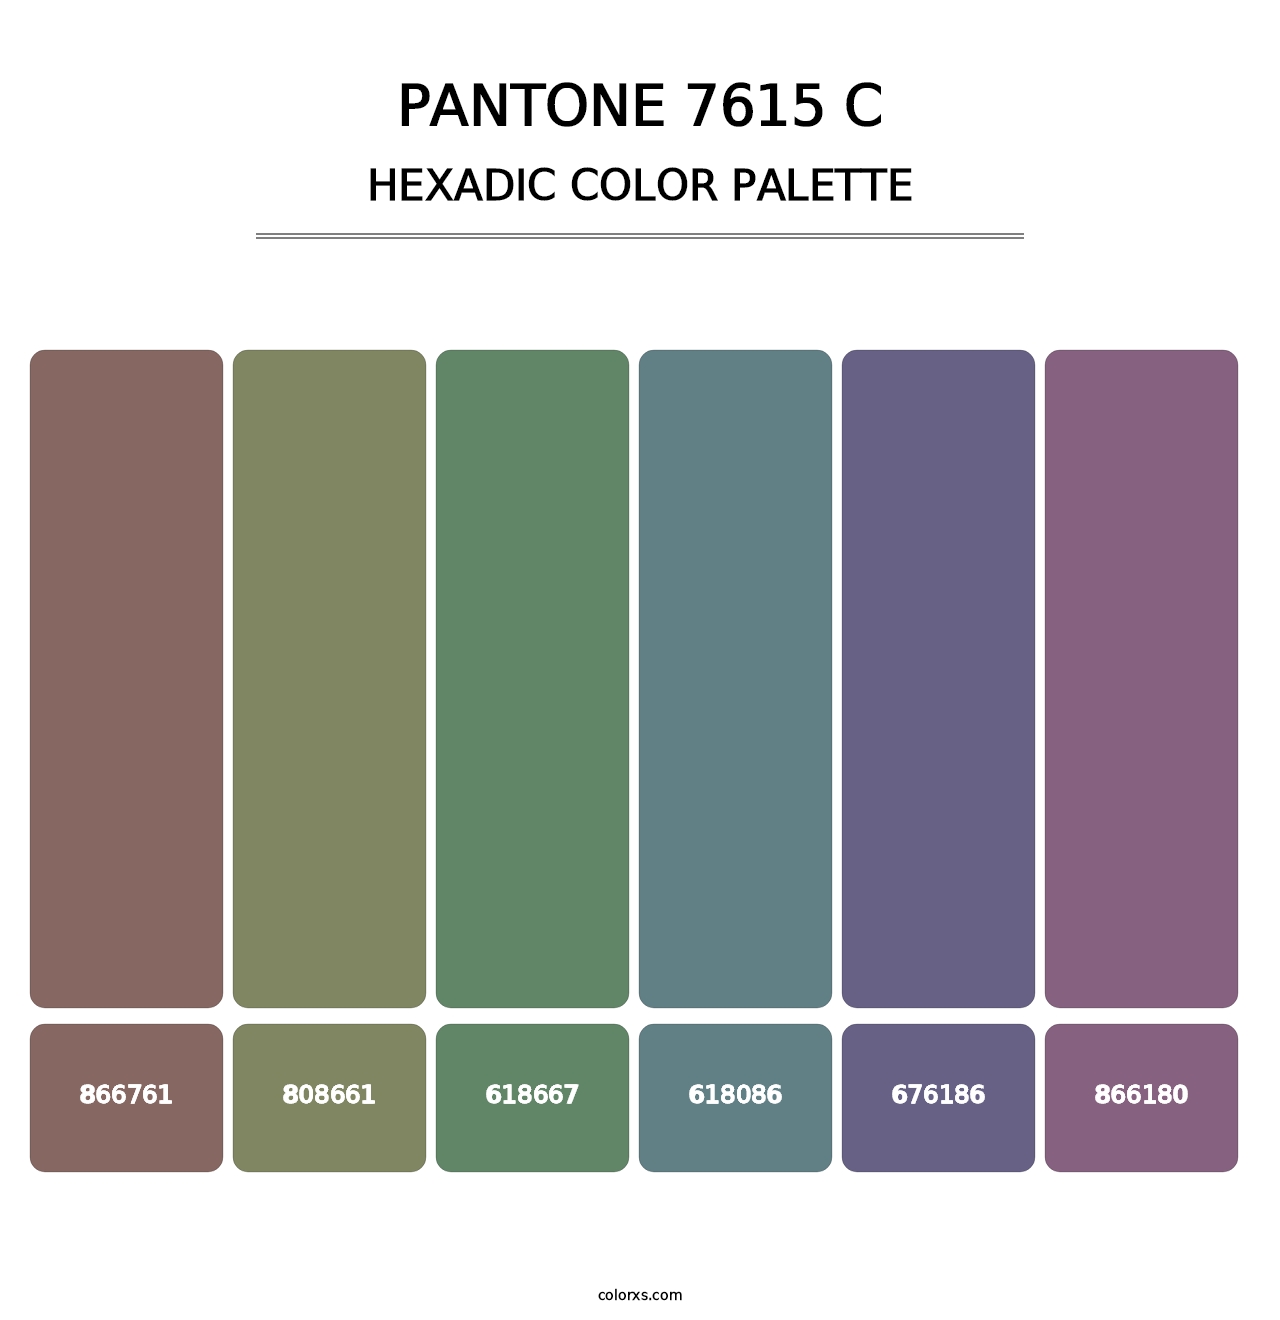 PANTONE 7615 C - Hexadic Color Palette